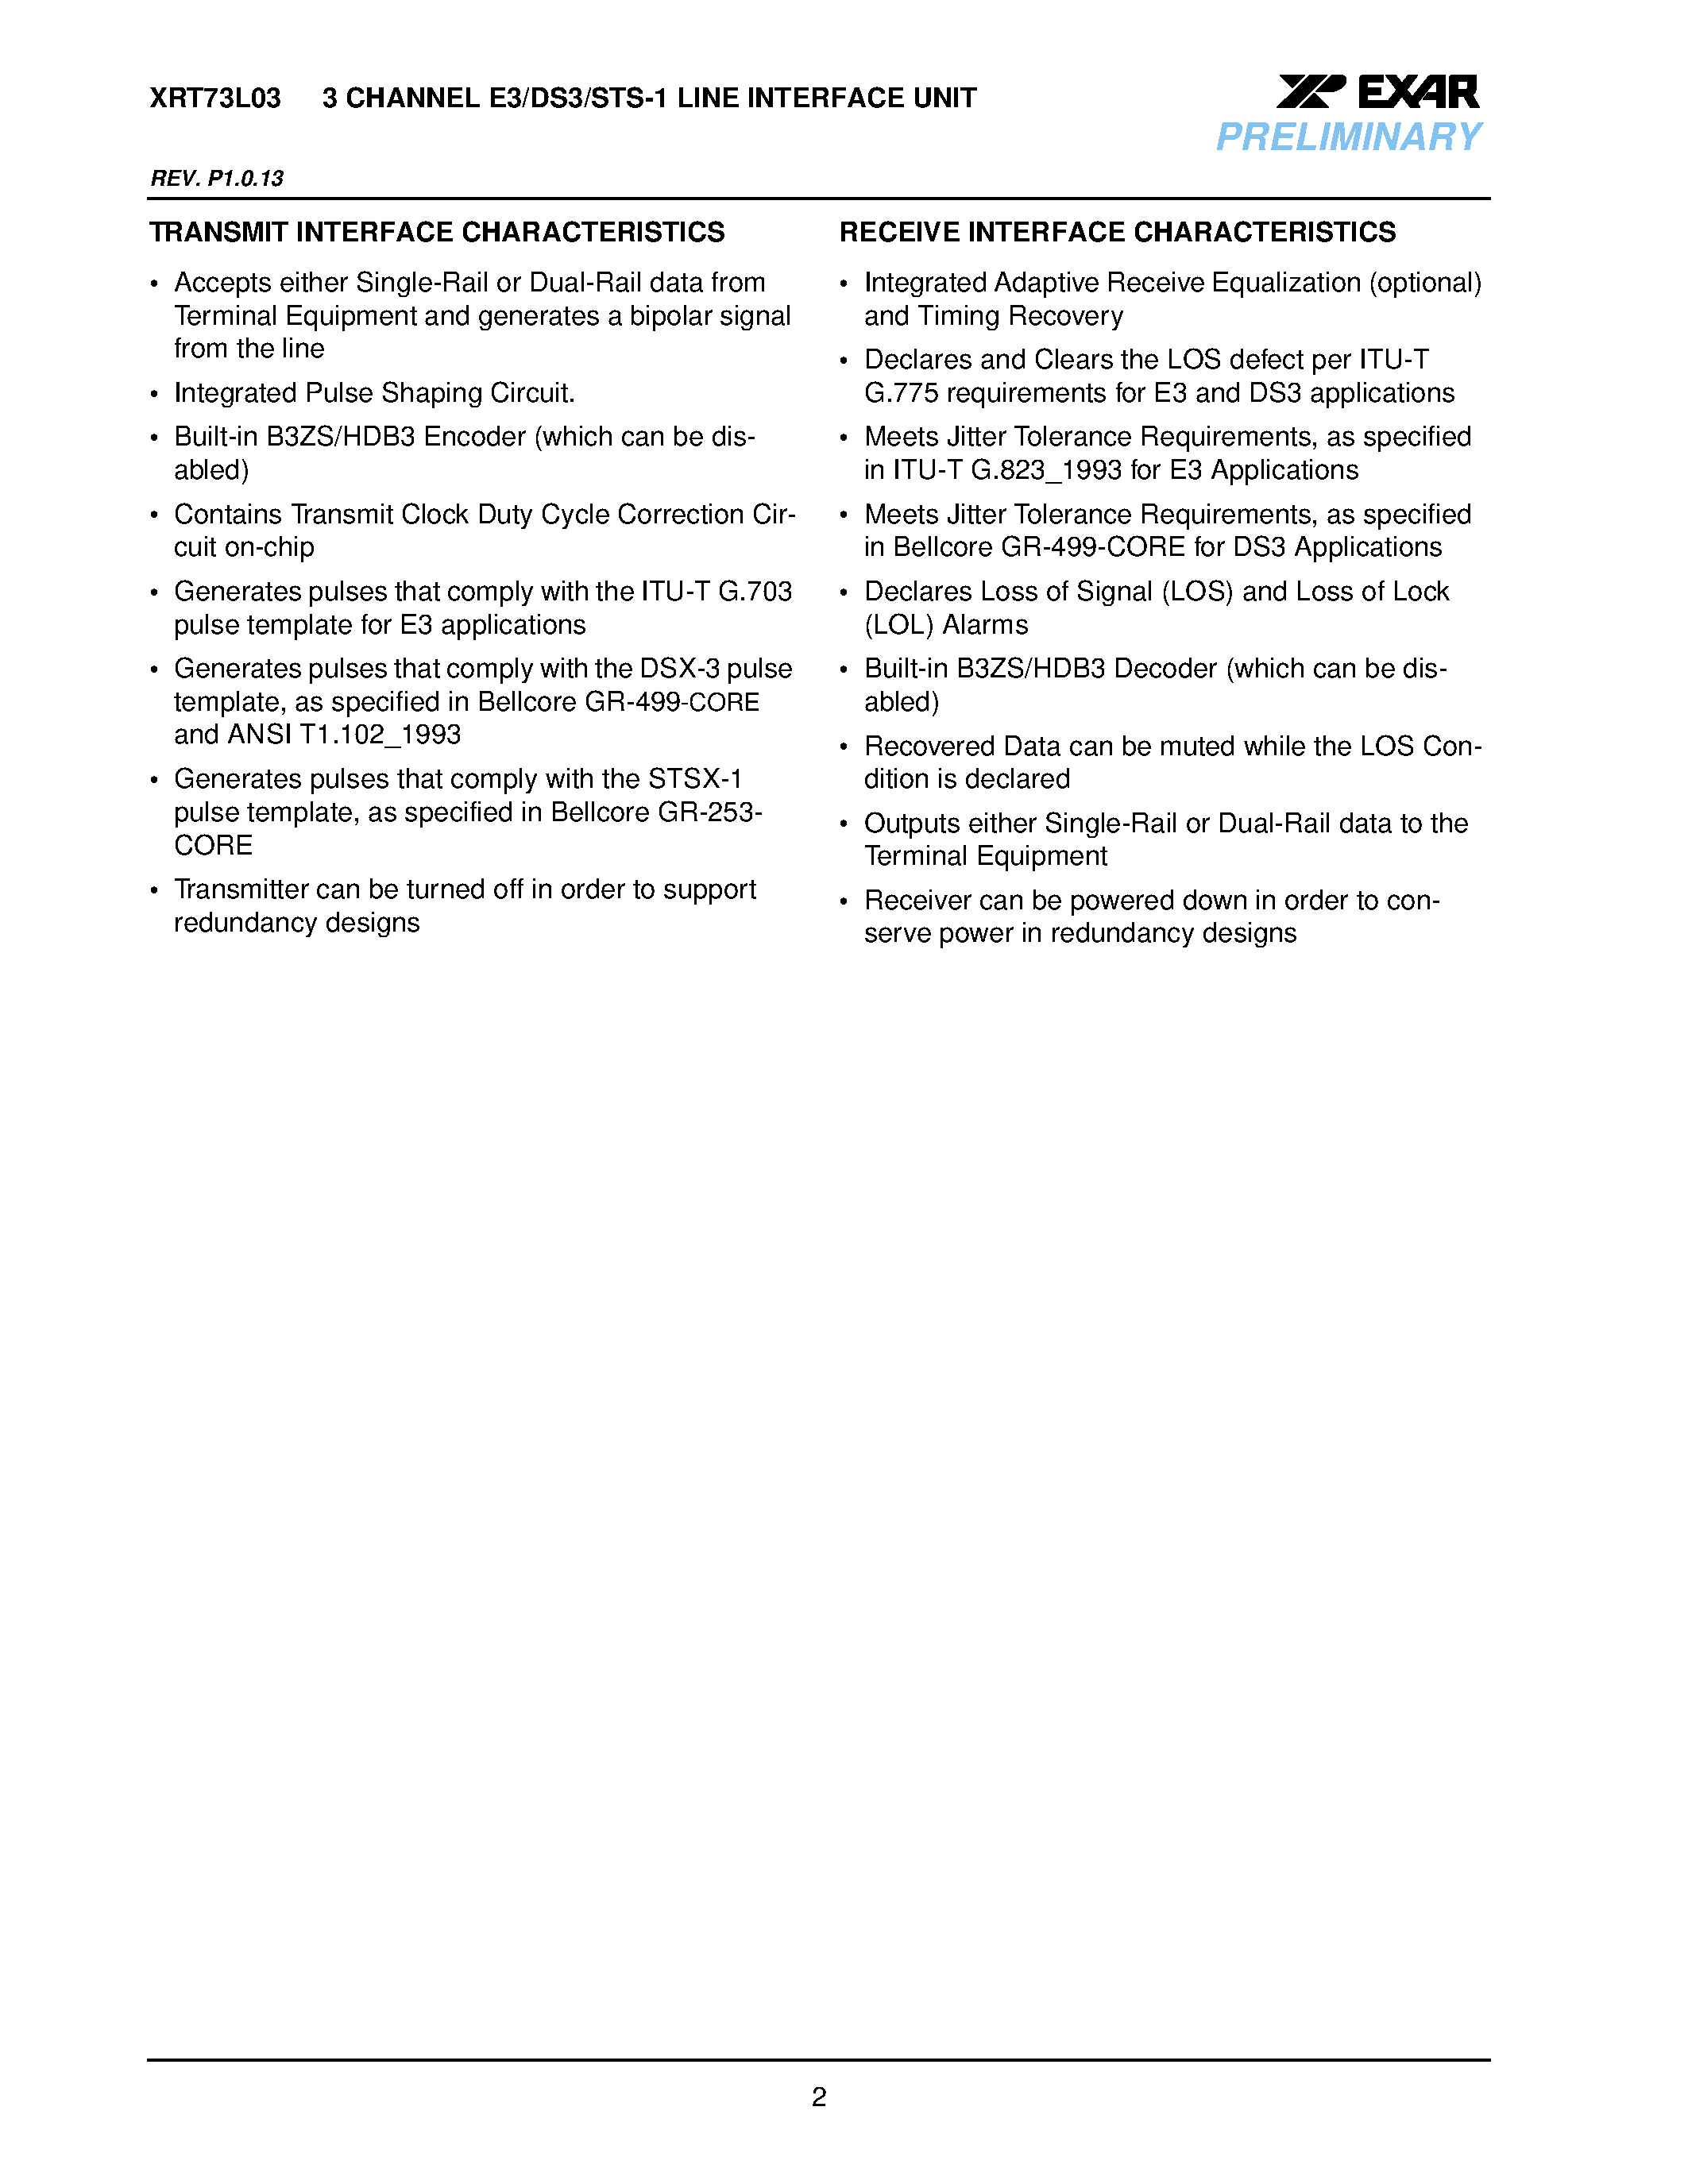 Datasheet XRT73L03 - 3 CHANNEL E3/DS3/STS-1 LINE INTERFCE UNIT page 2